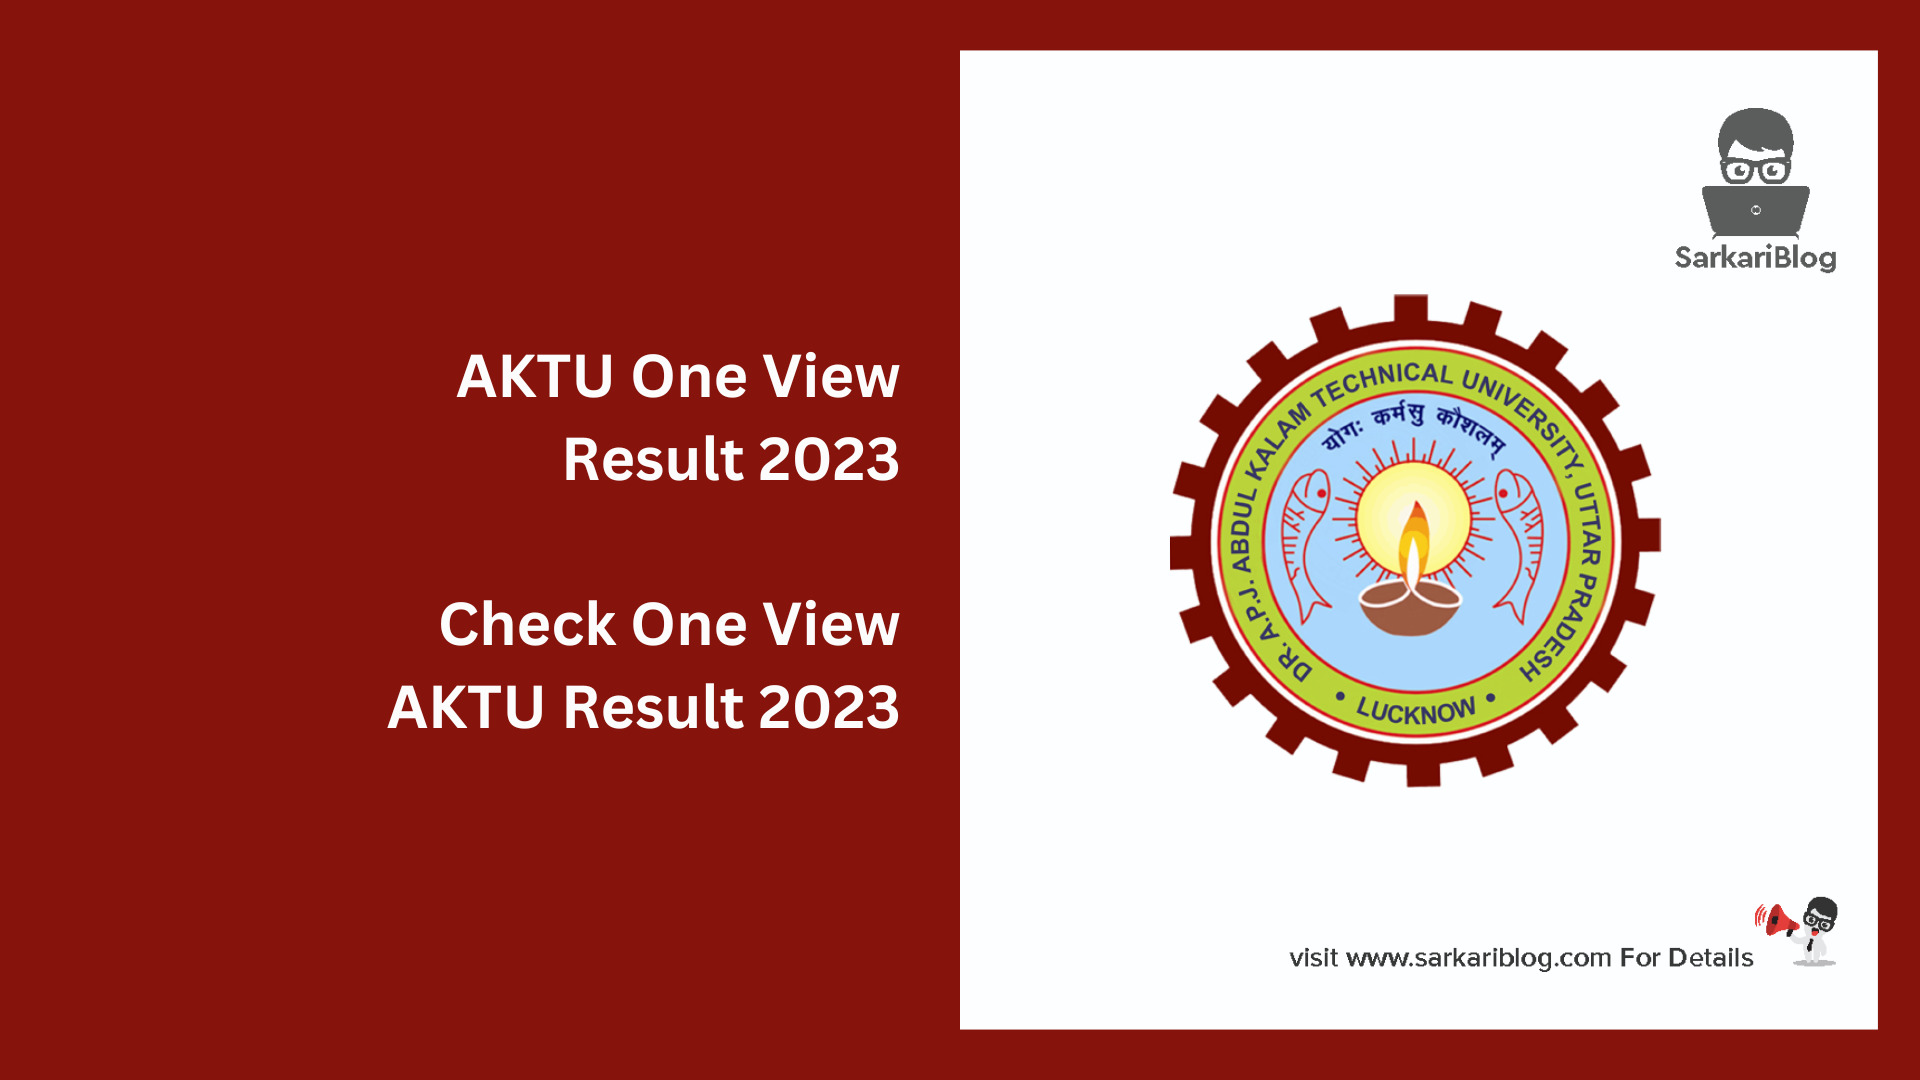 AKTU One View Result 2023